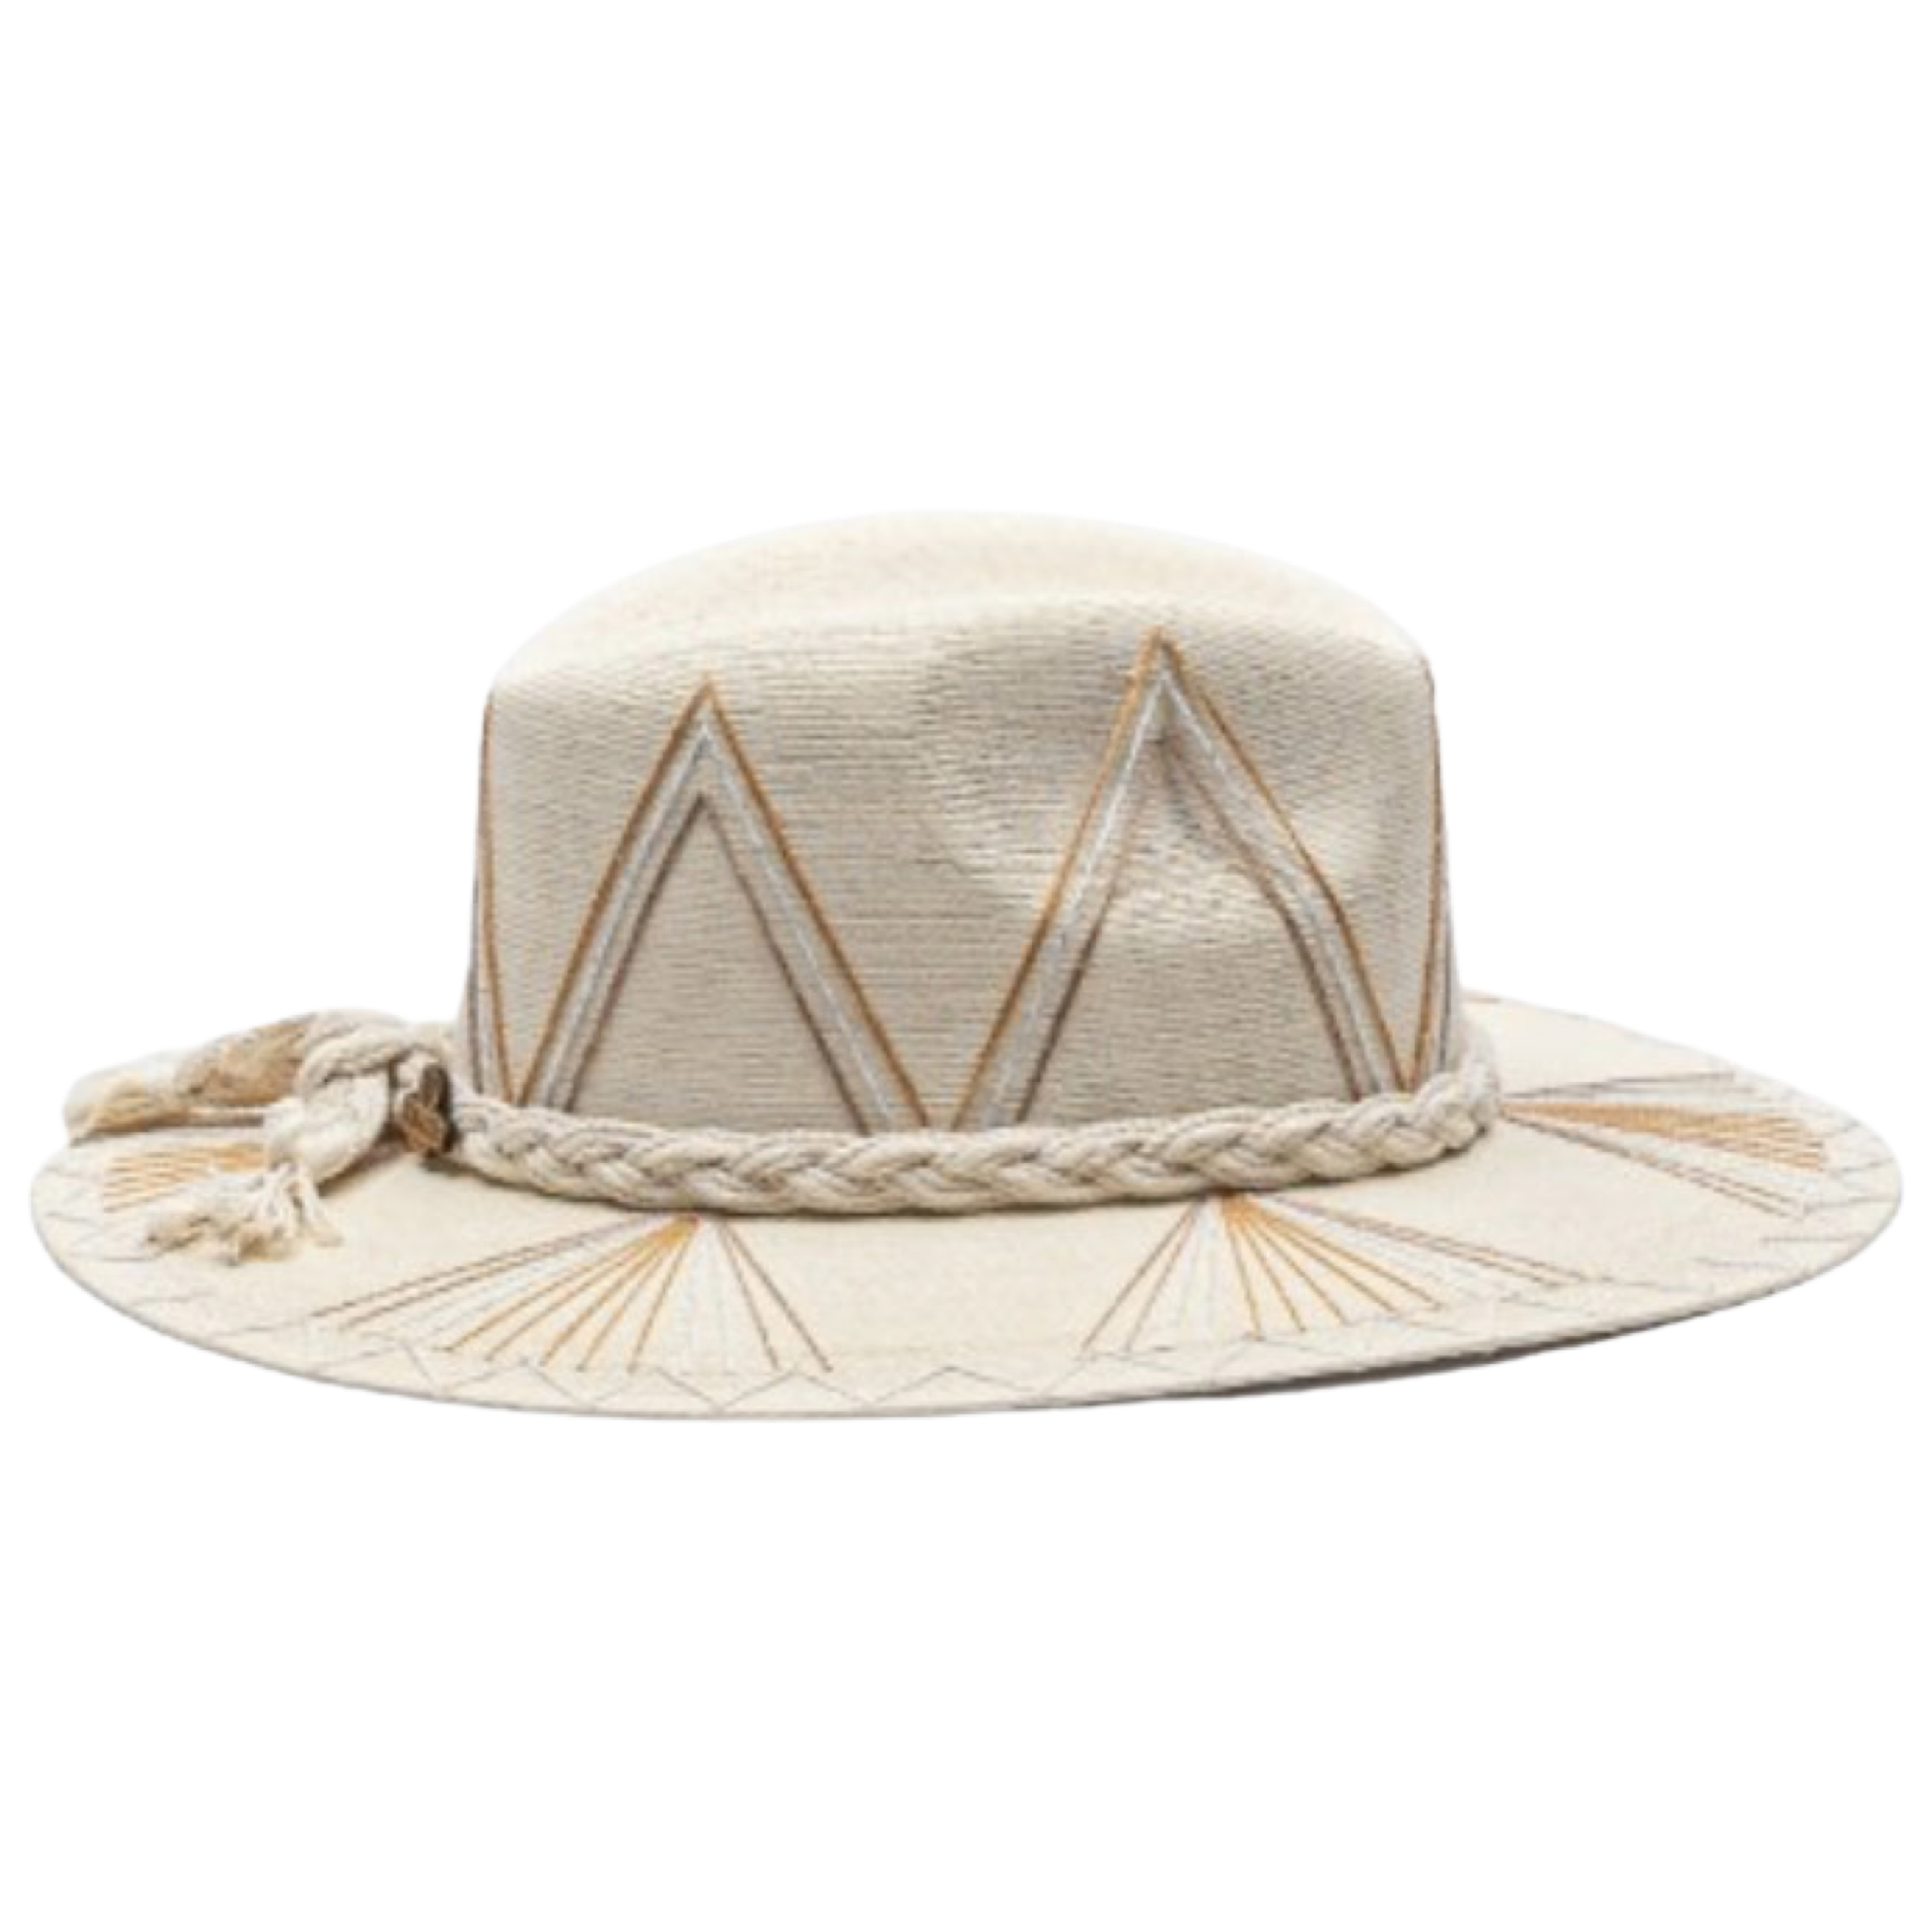 Exclusive Amy Metallic Neutral Hat by Corazon Playero - Preorder